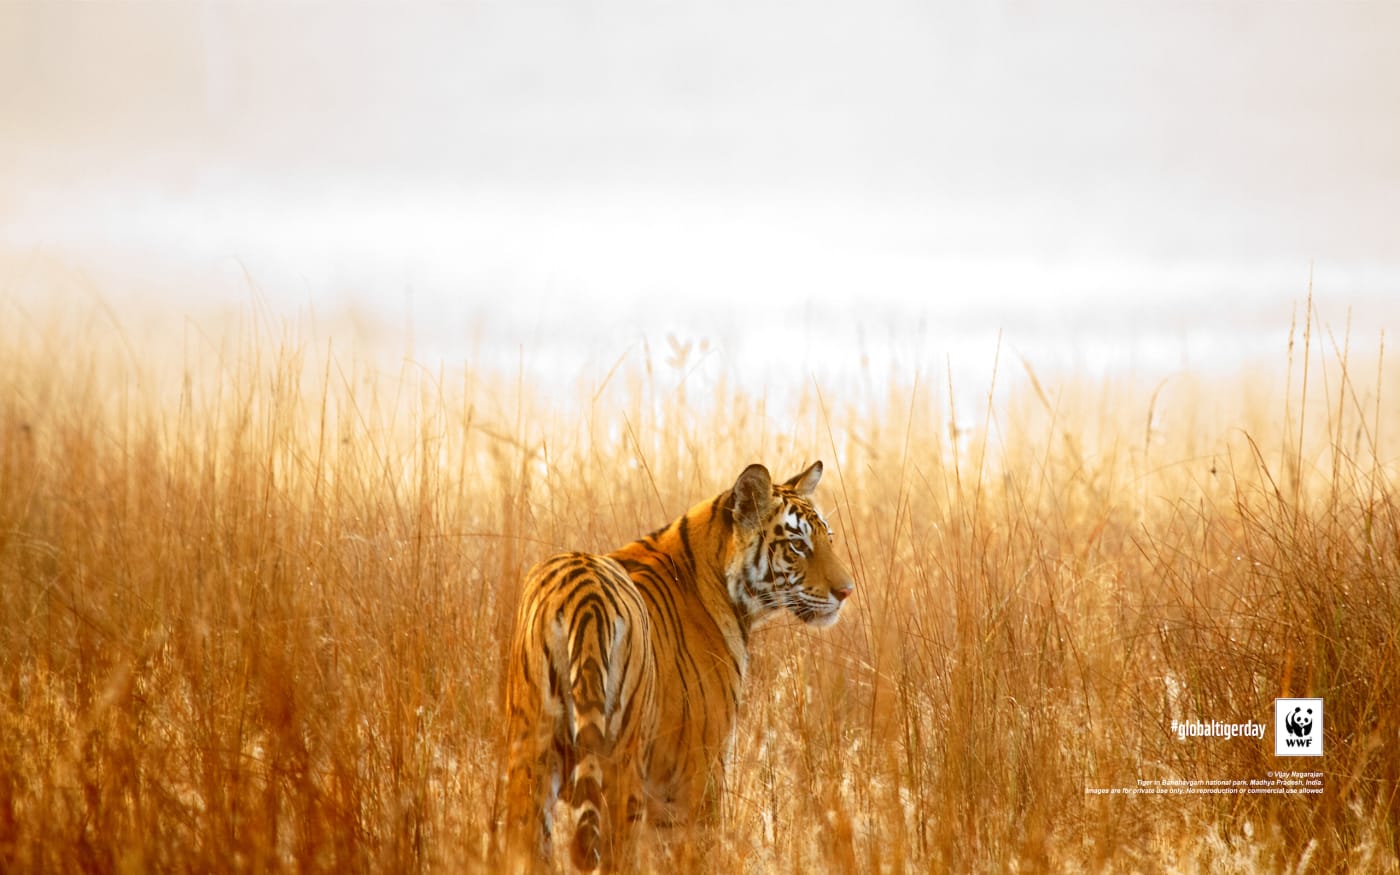 Tiger in Bandhavgarh national park, Madhya Pradesh, India